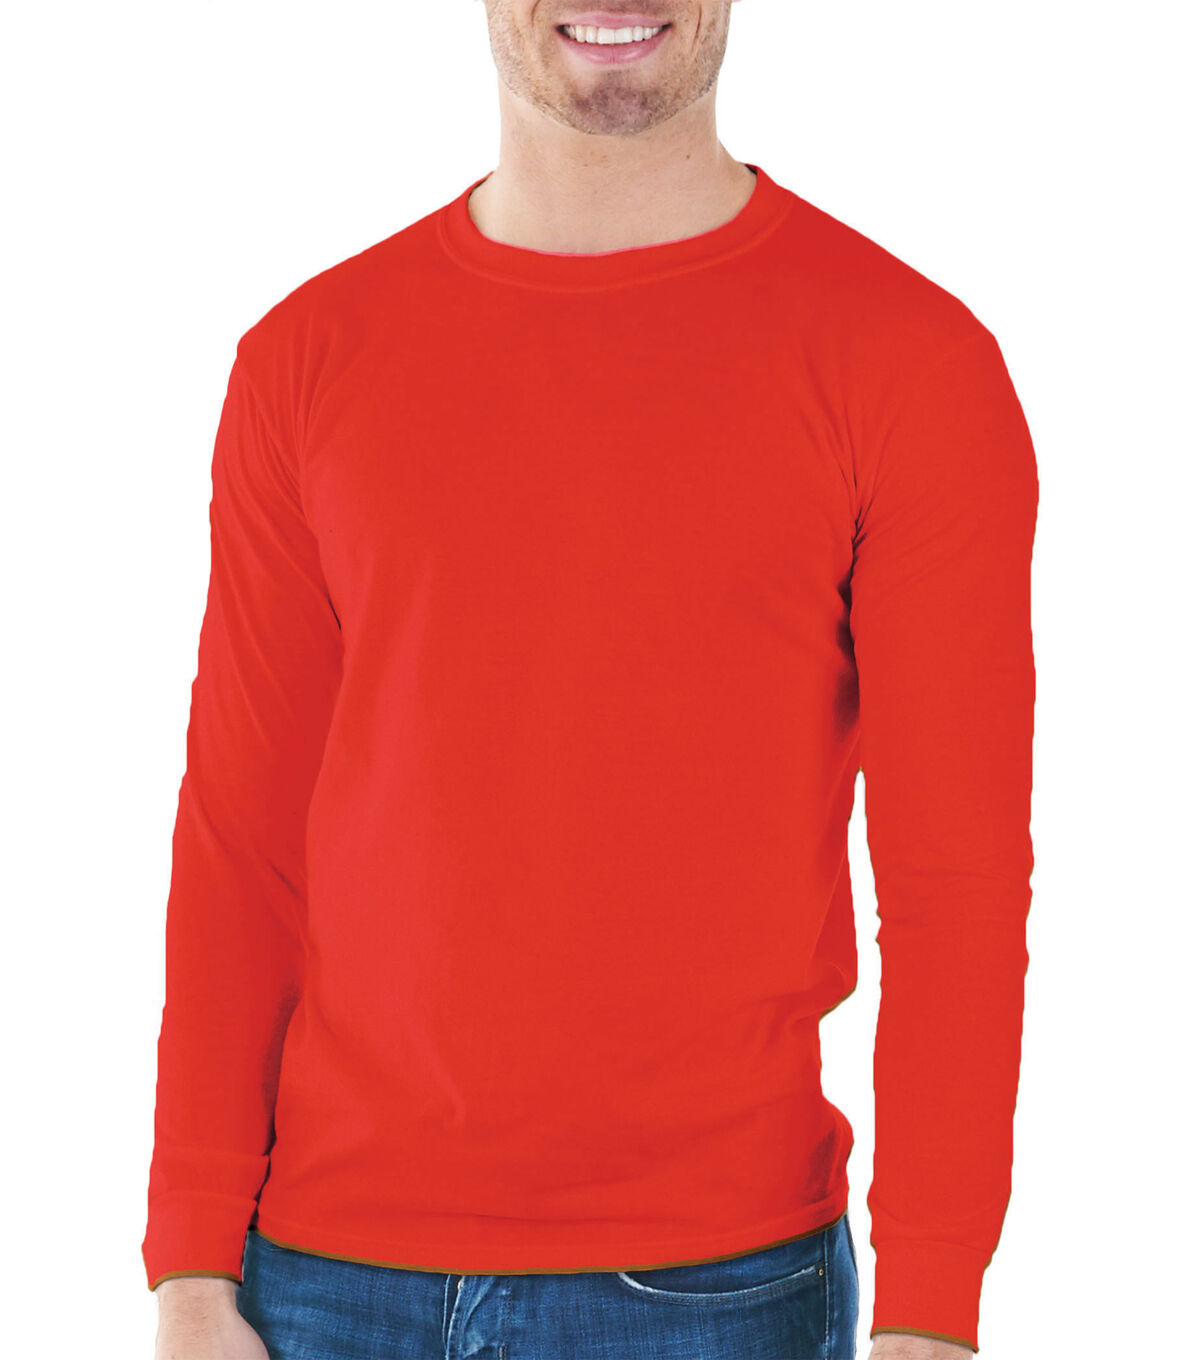 red long sleeve tee shirt